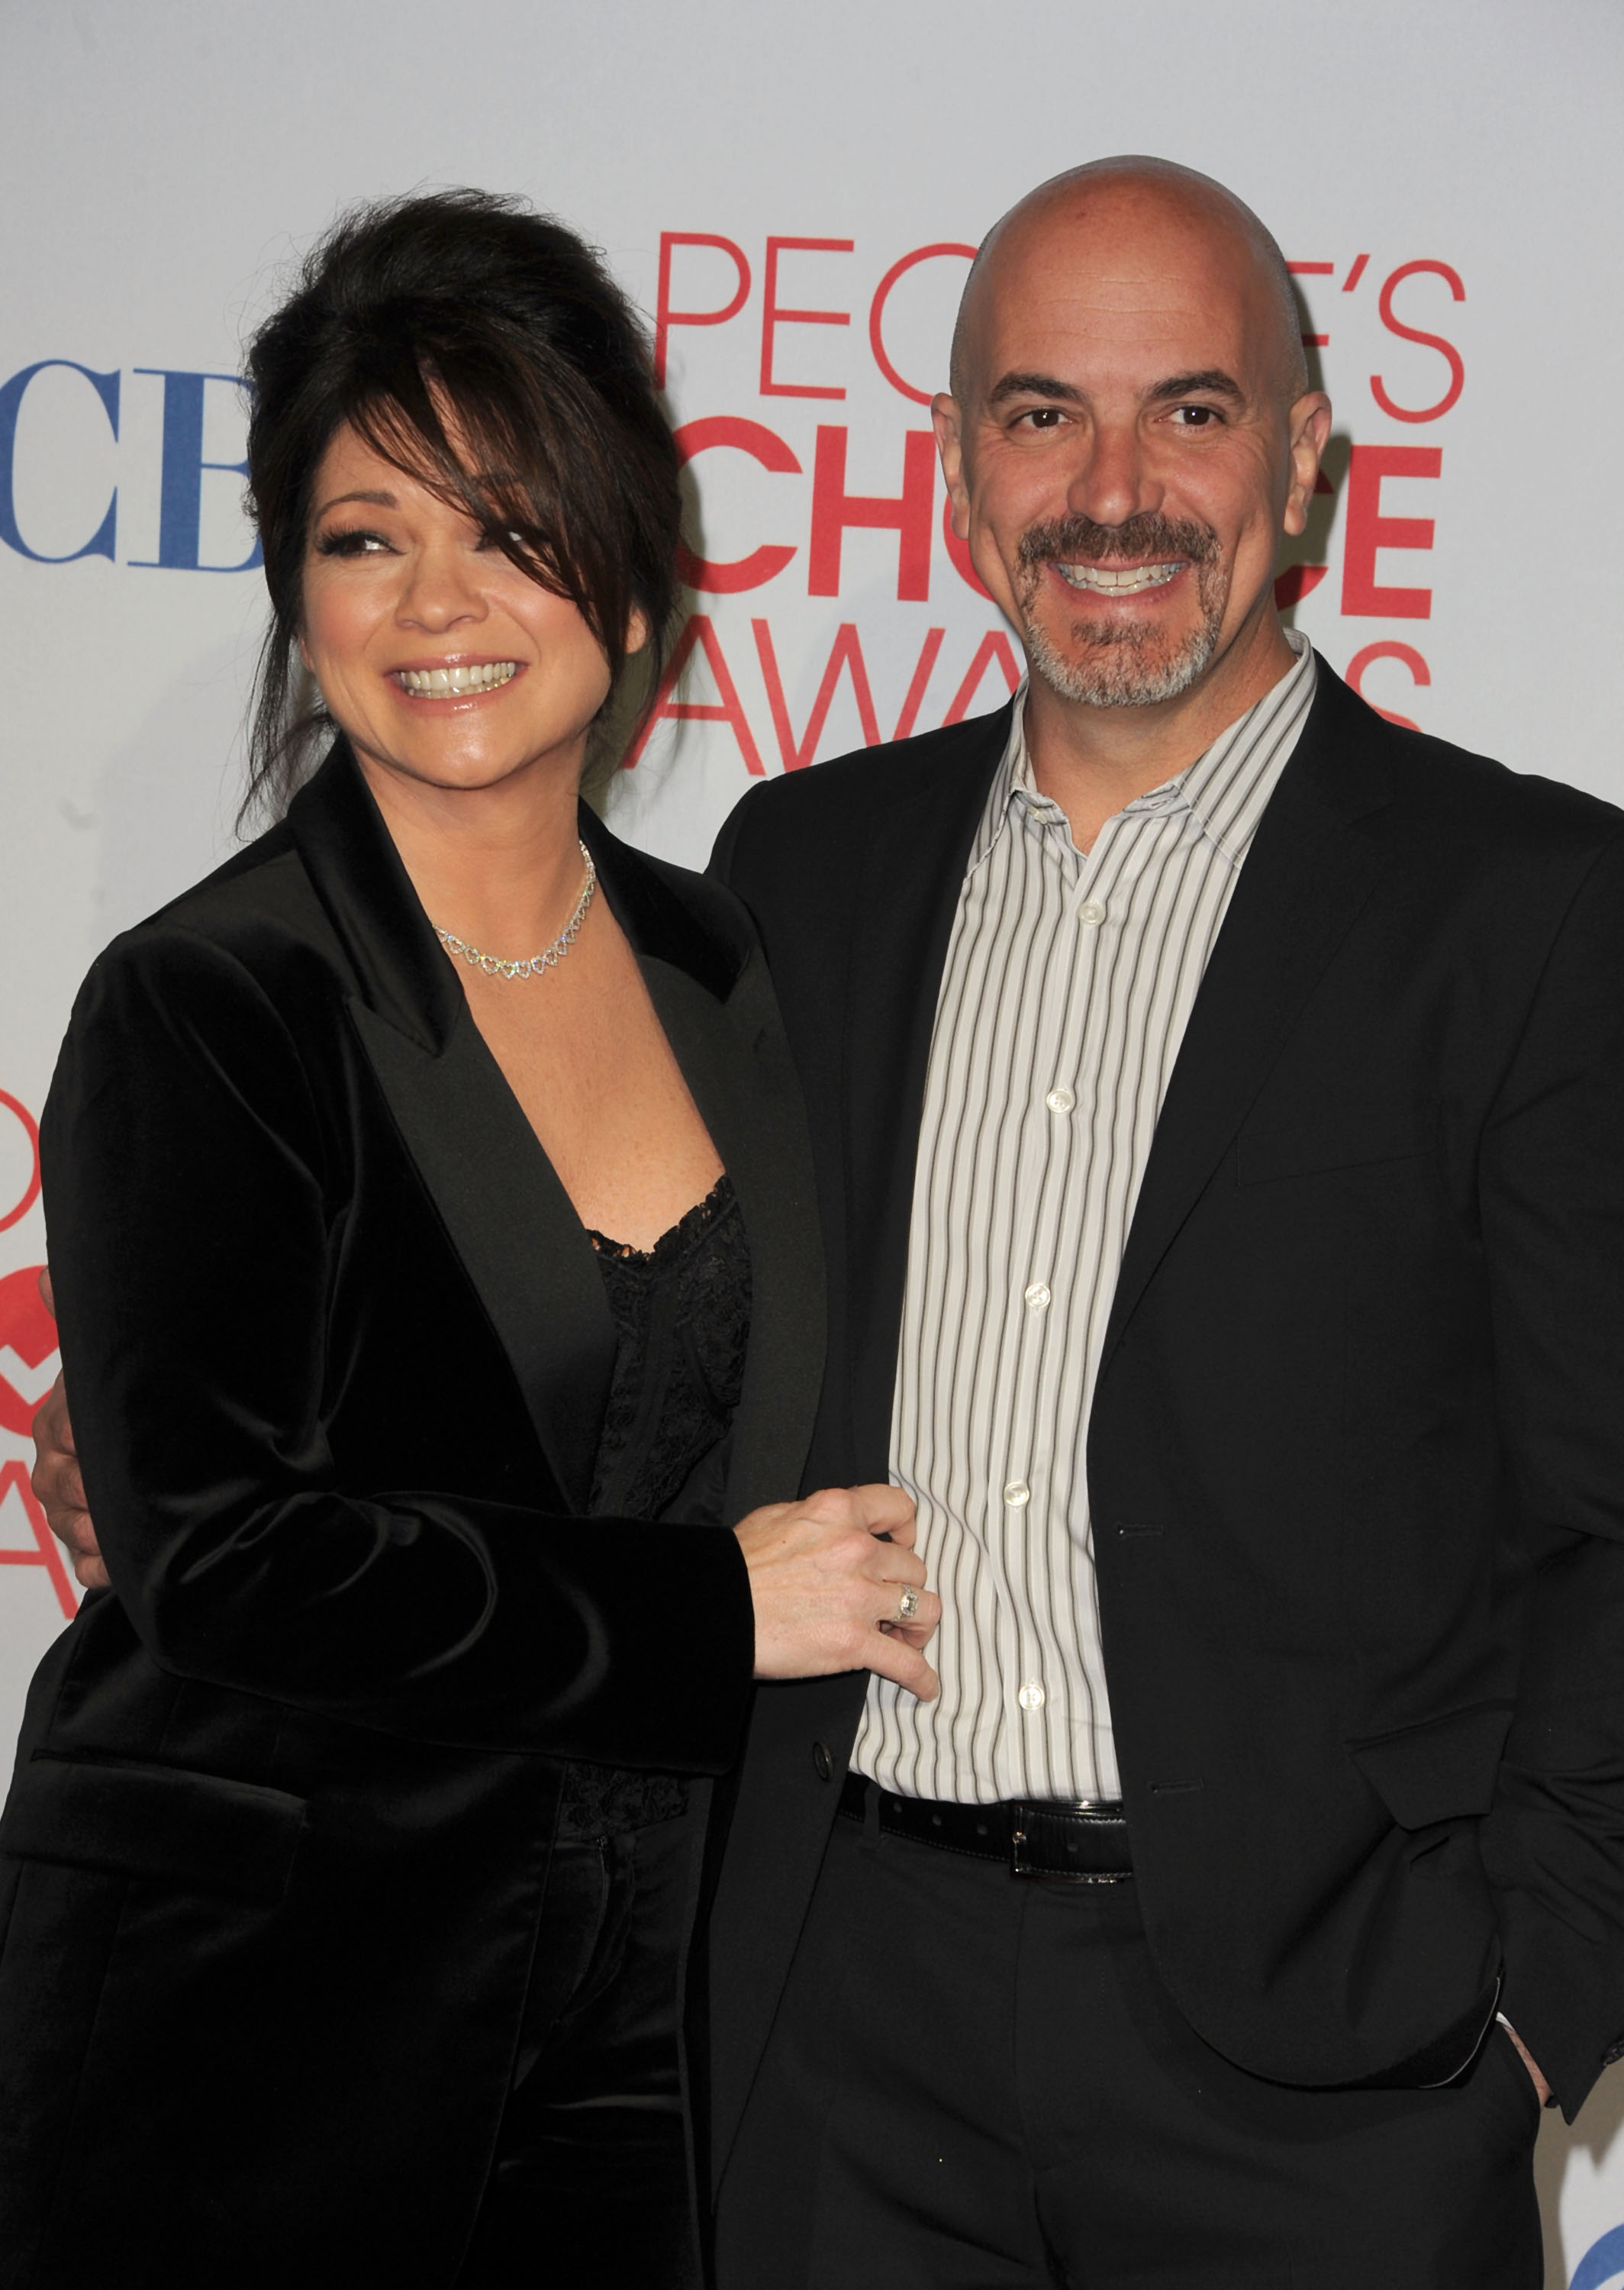 Valerie Bertinelli und Tom Vitale bei den People's Choice Awards in Los Angeles, Kalifornien am 11. Januar 2012 | Quelle: Getty Images